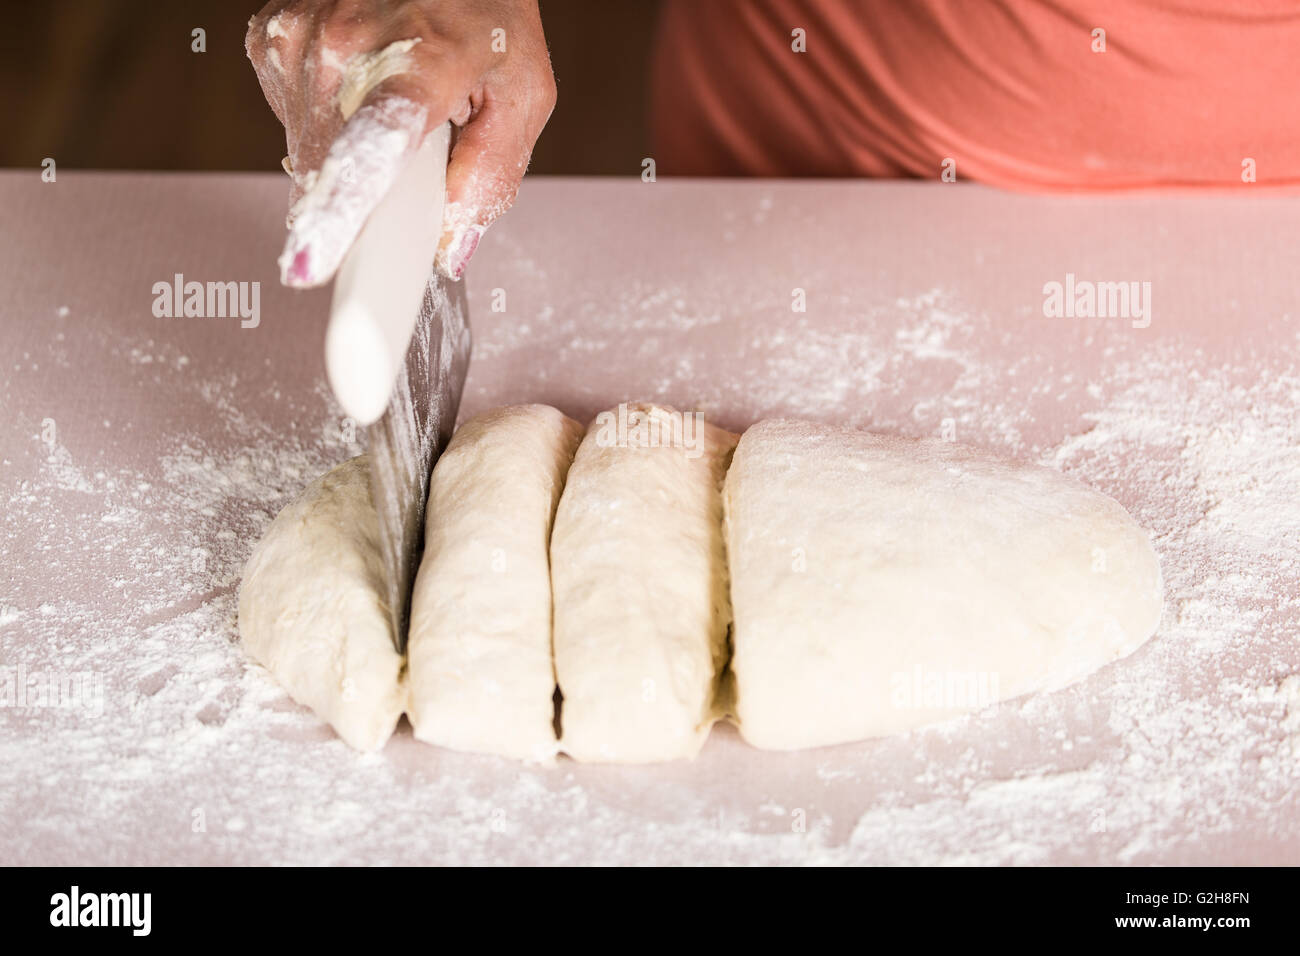 https://c8.alamy.com/comp/G2H8FN/woman-using-a-dough-cutter-to-divide-the-naan-bread-dough-into-six-G2H8FN.jpg